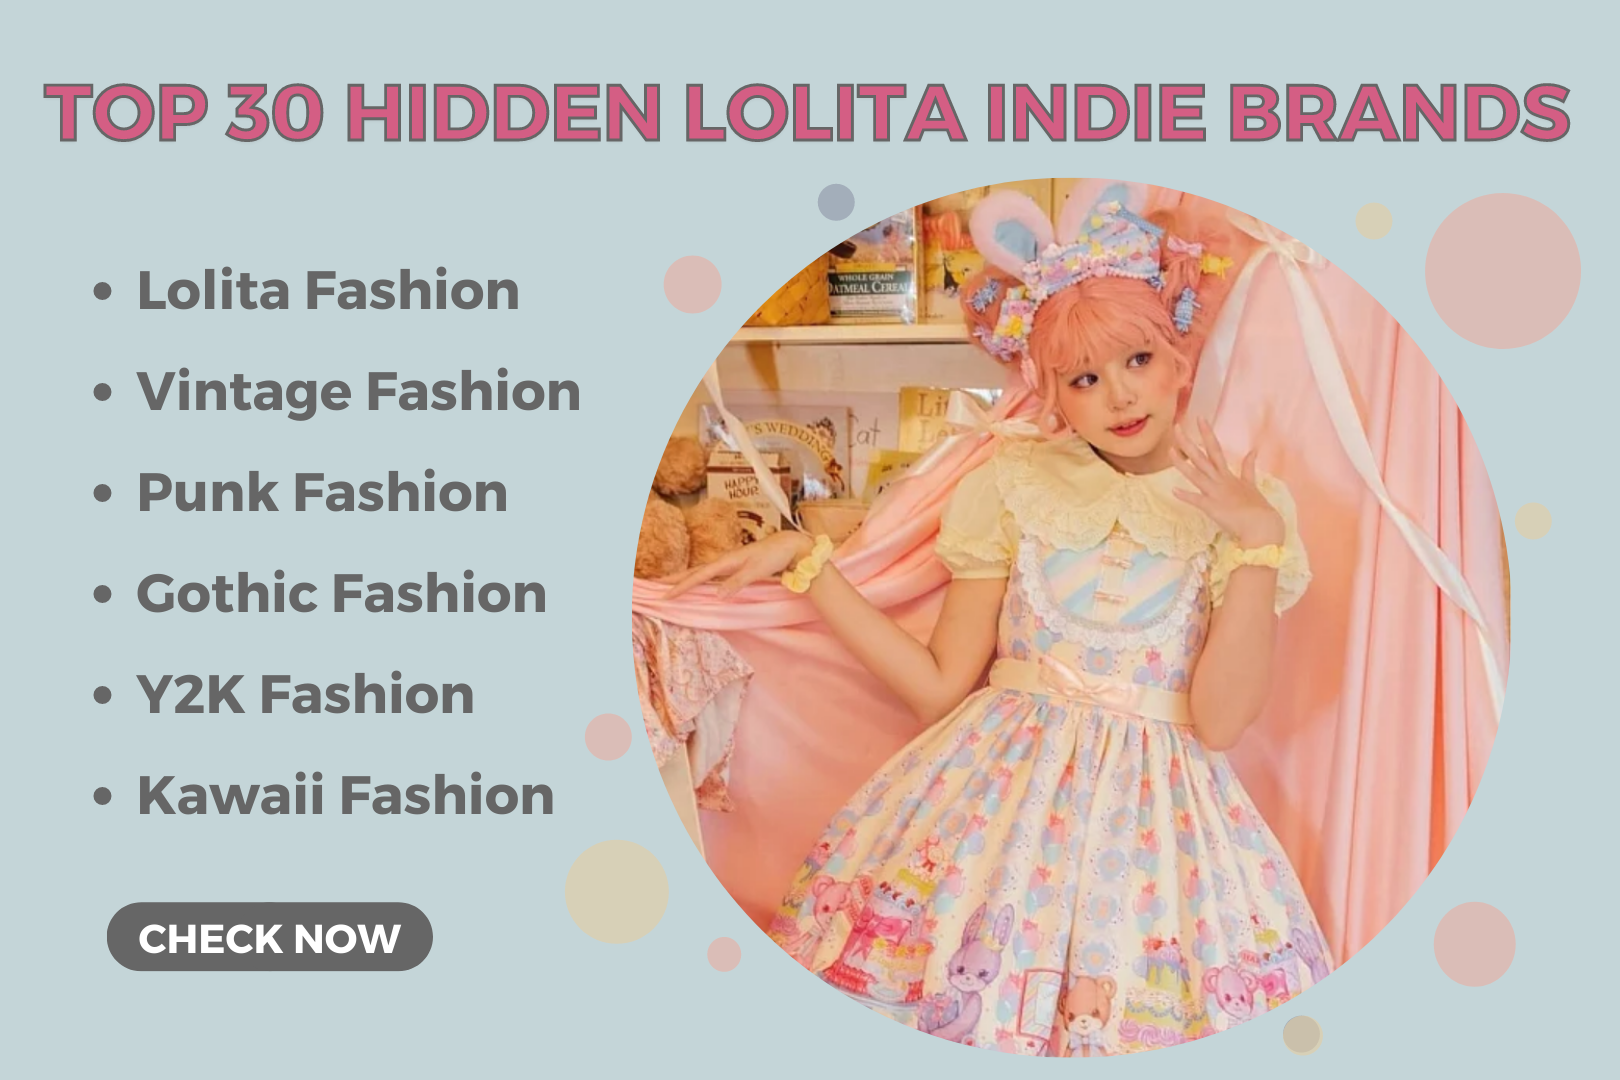 New to Lolita Fashion? Check this Lolita Fashion Glossary